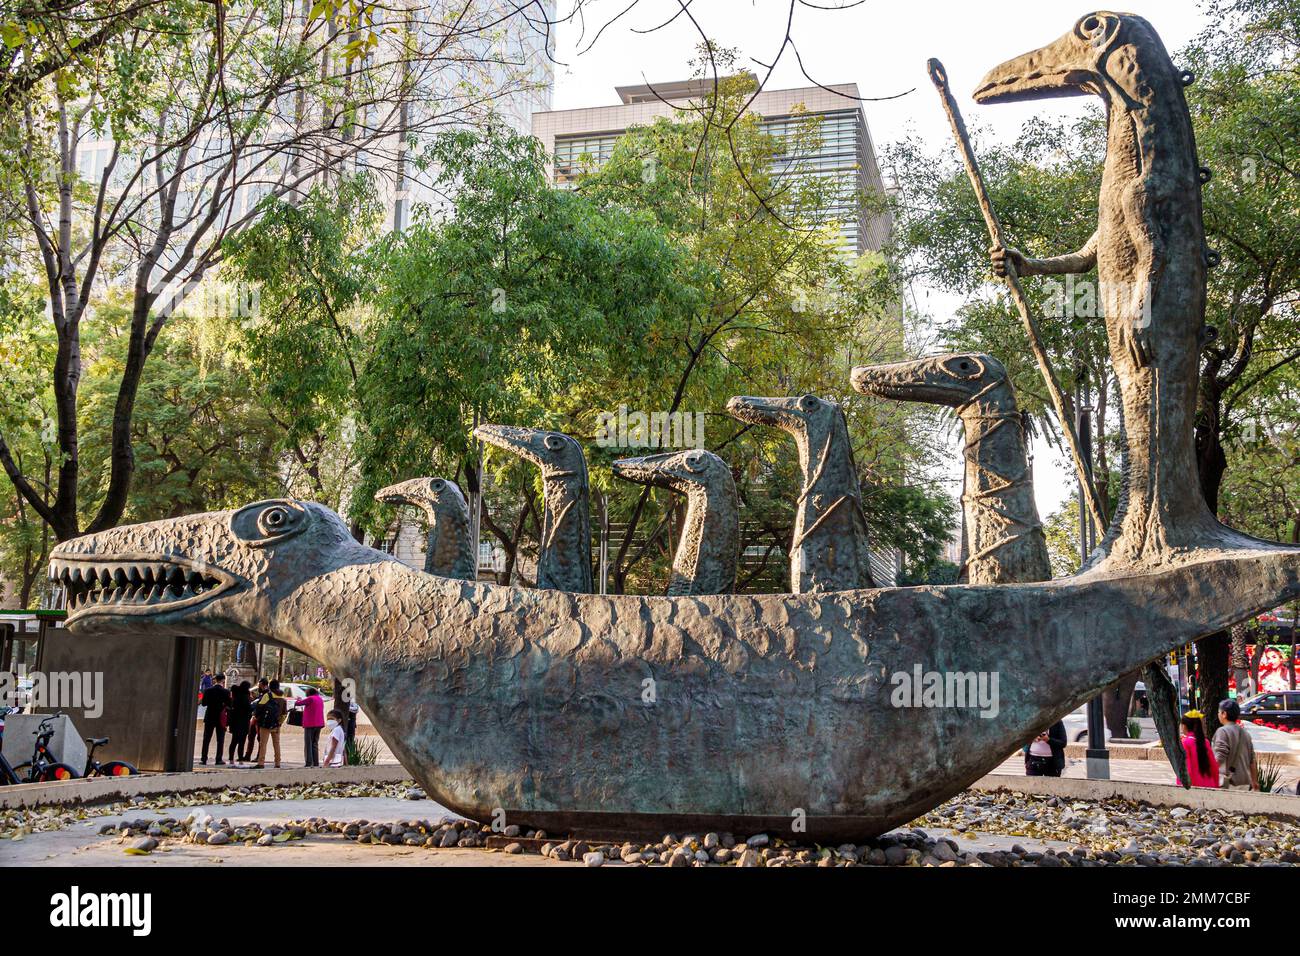 Mexico City,Avenida Paseo de la Reforma,public art artwork Cocodrilo Little Crocodile surrealist sculpture by Lenora Carrington Stock Photo